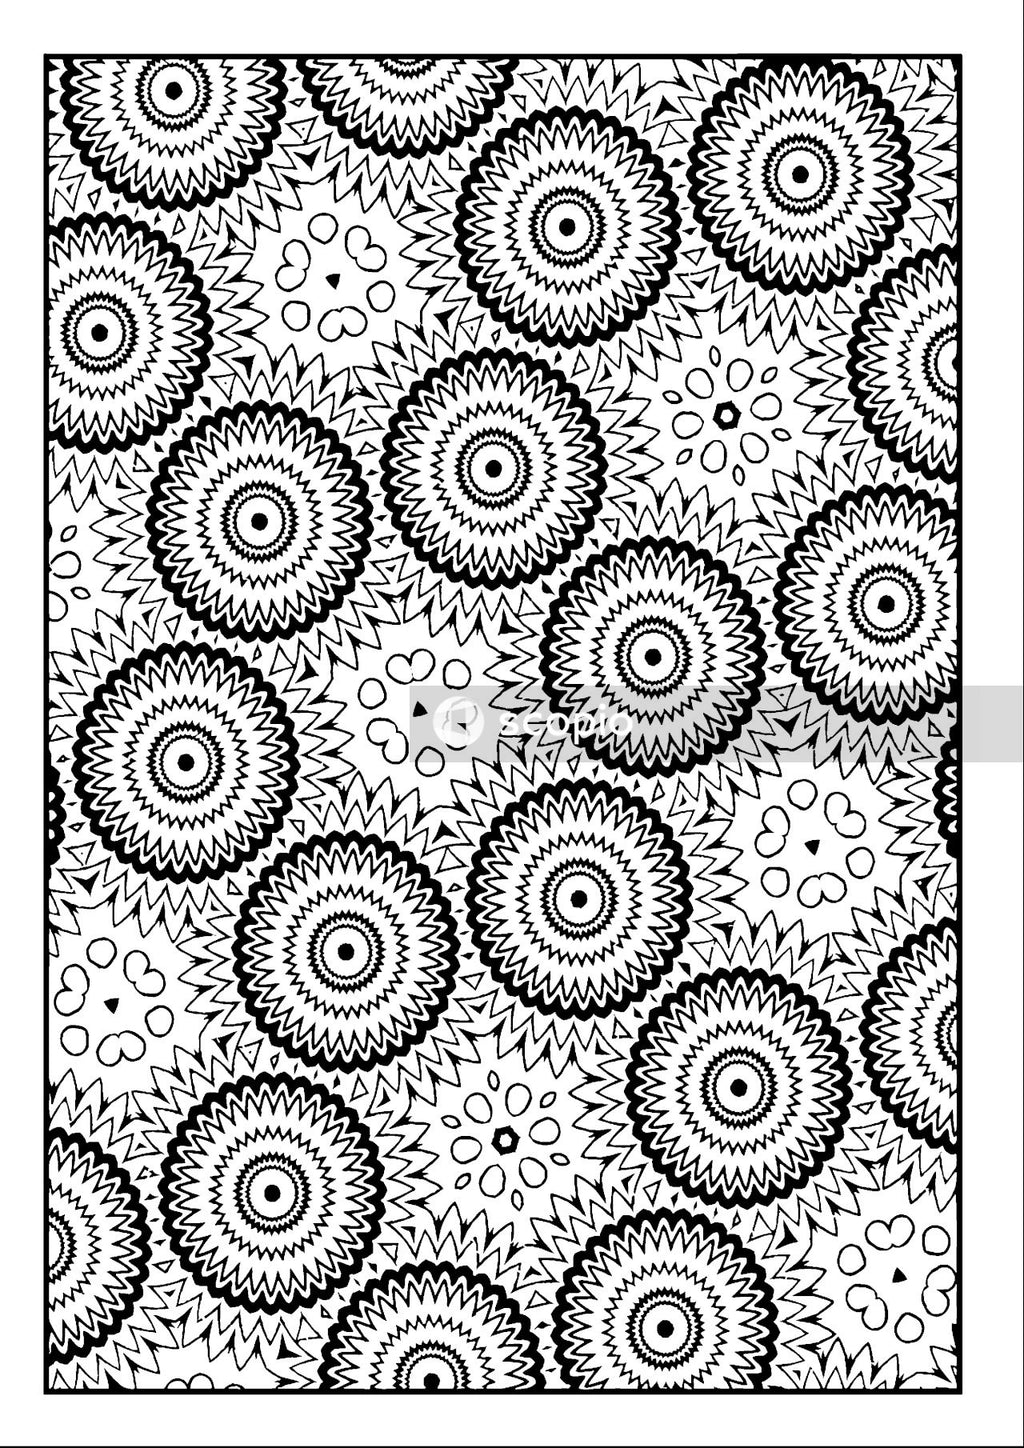 White and black circle pattern